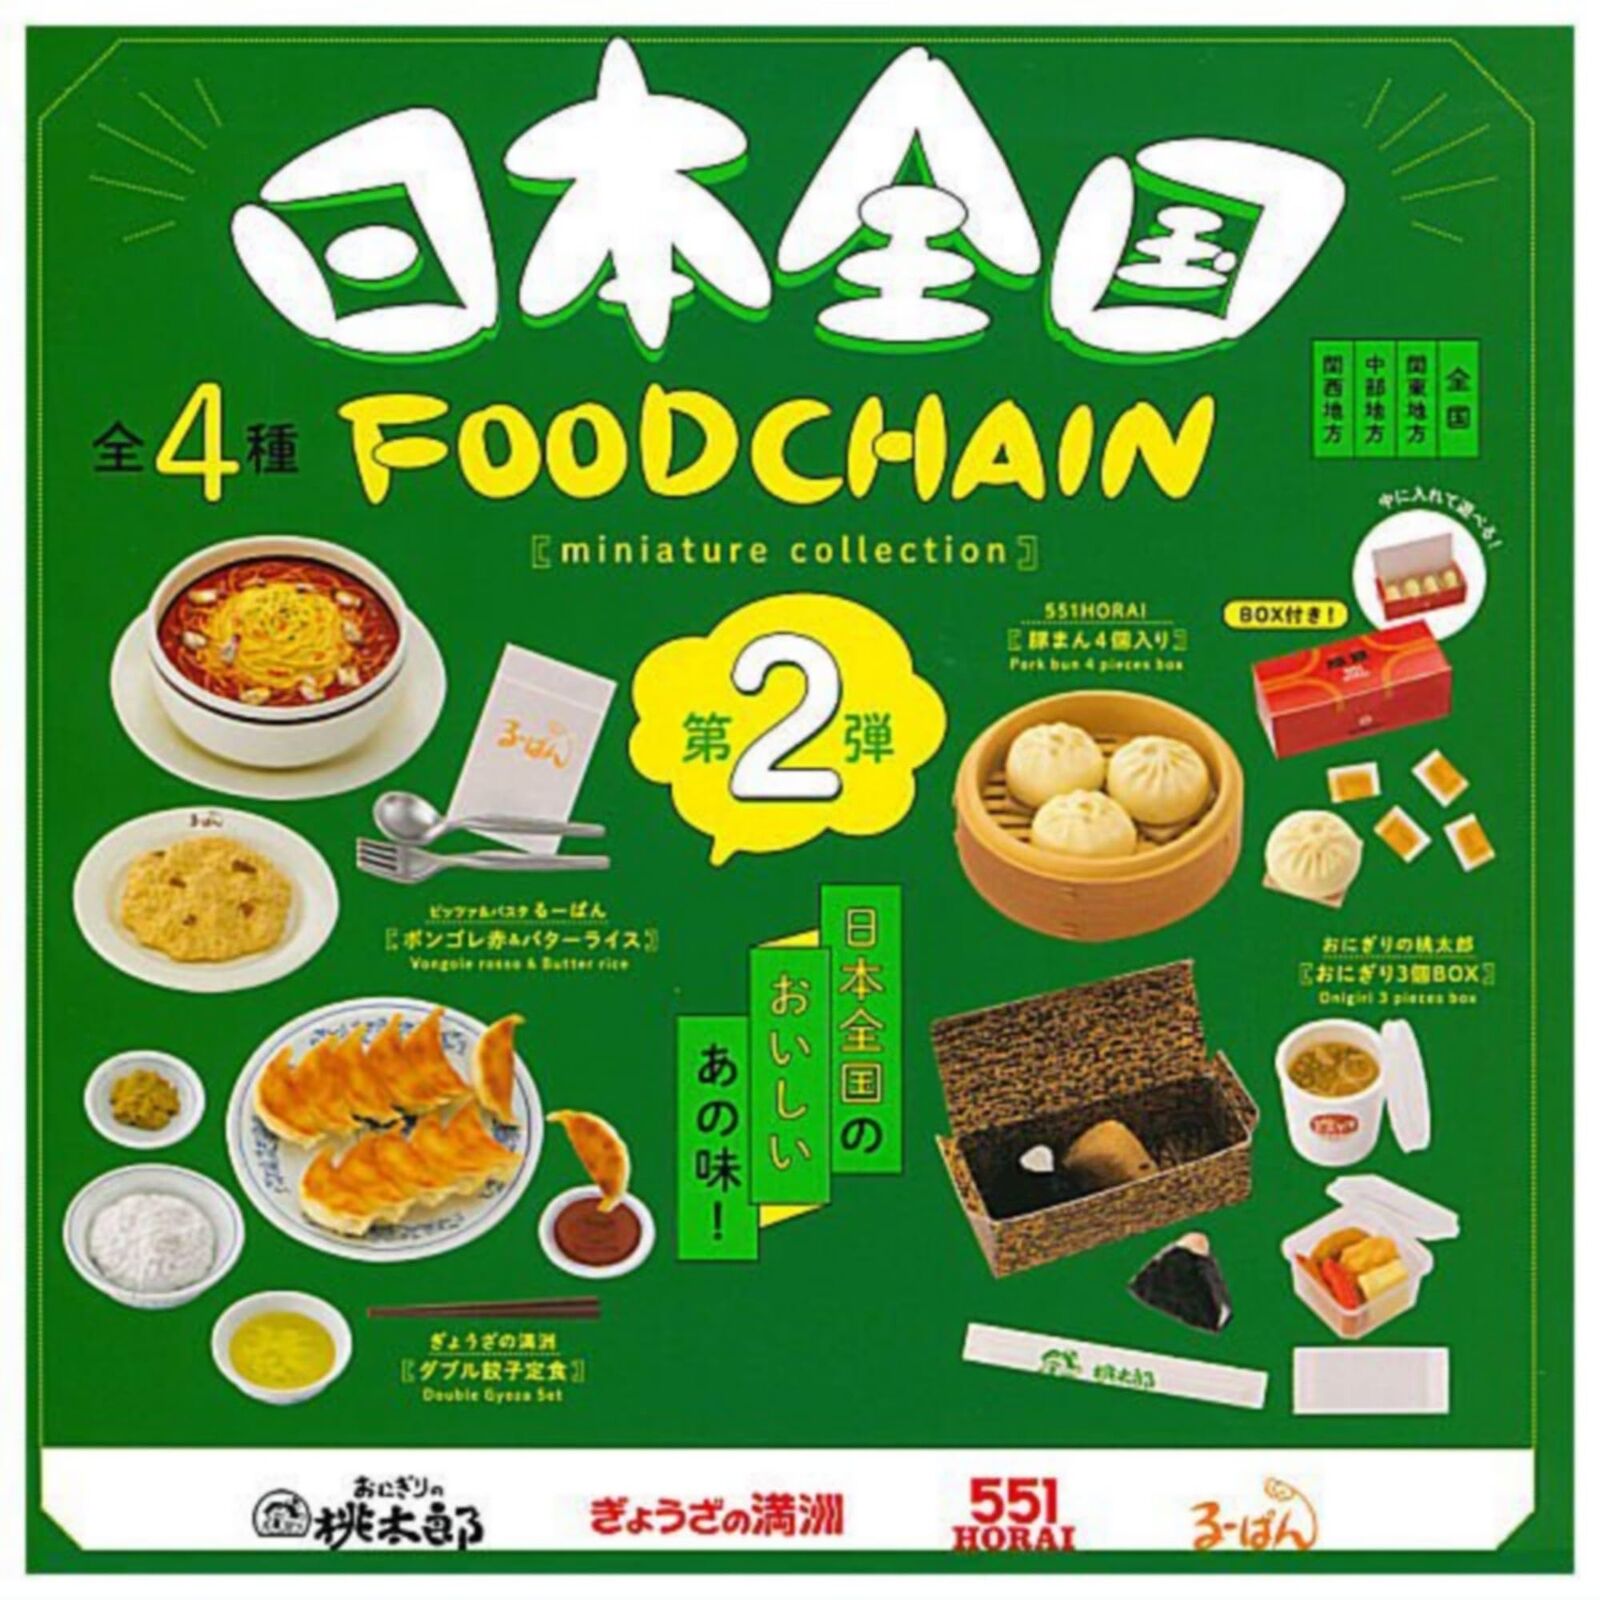 Japan National Food Chain Miniature Collection Vol. 2 All 4 Types Set Gacha Gach